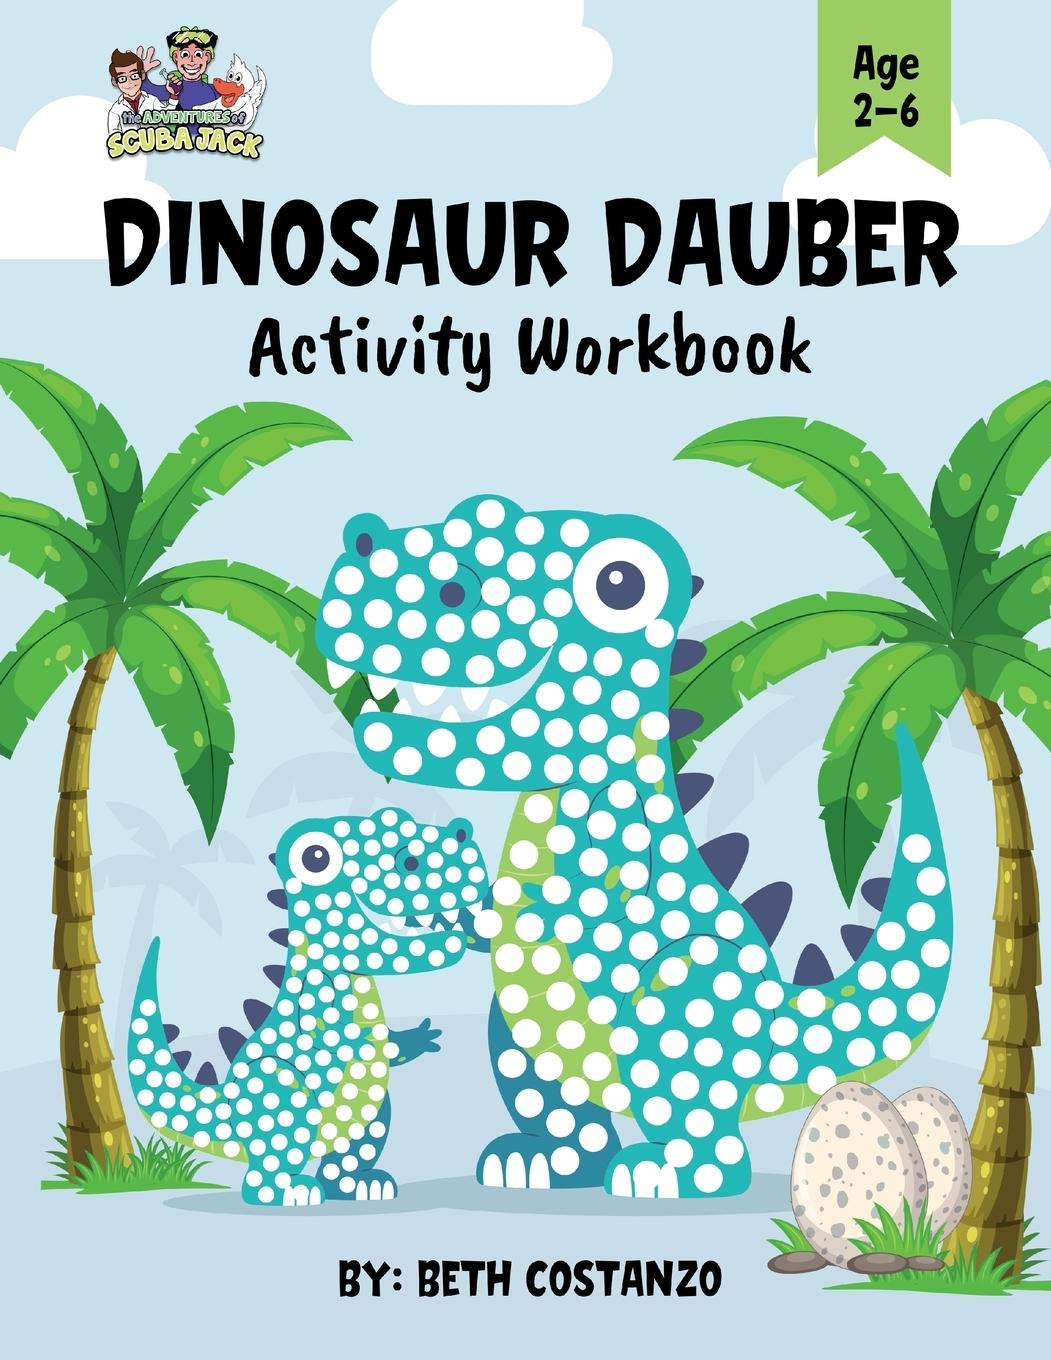 Book Dot Marker Dinosaur Activity Workbook for ages 2-6 